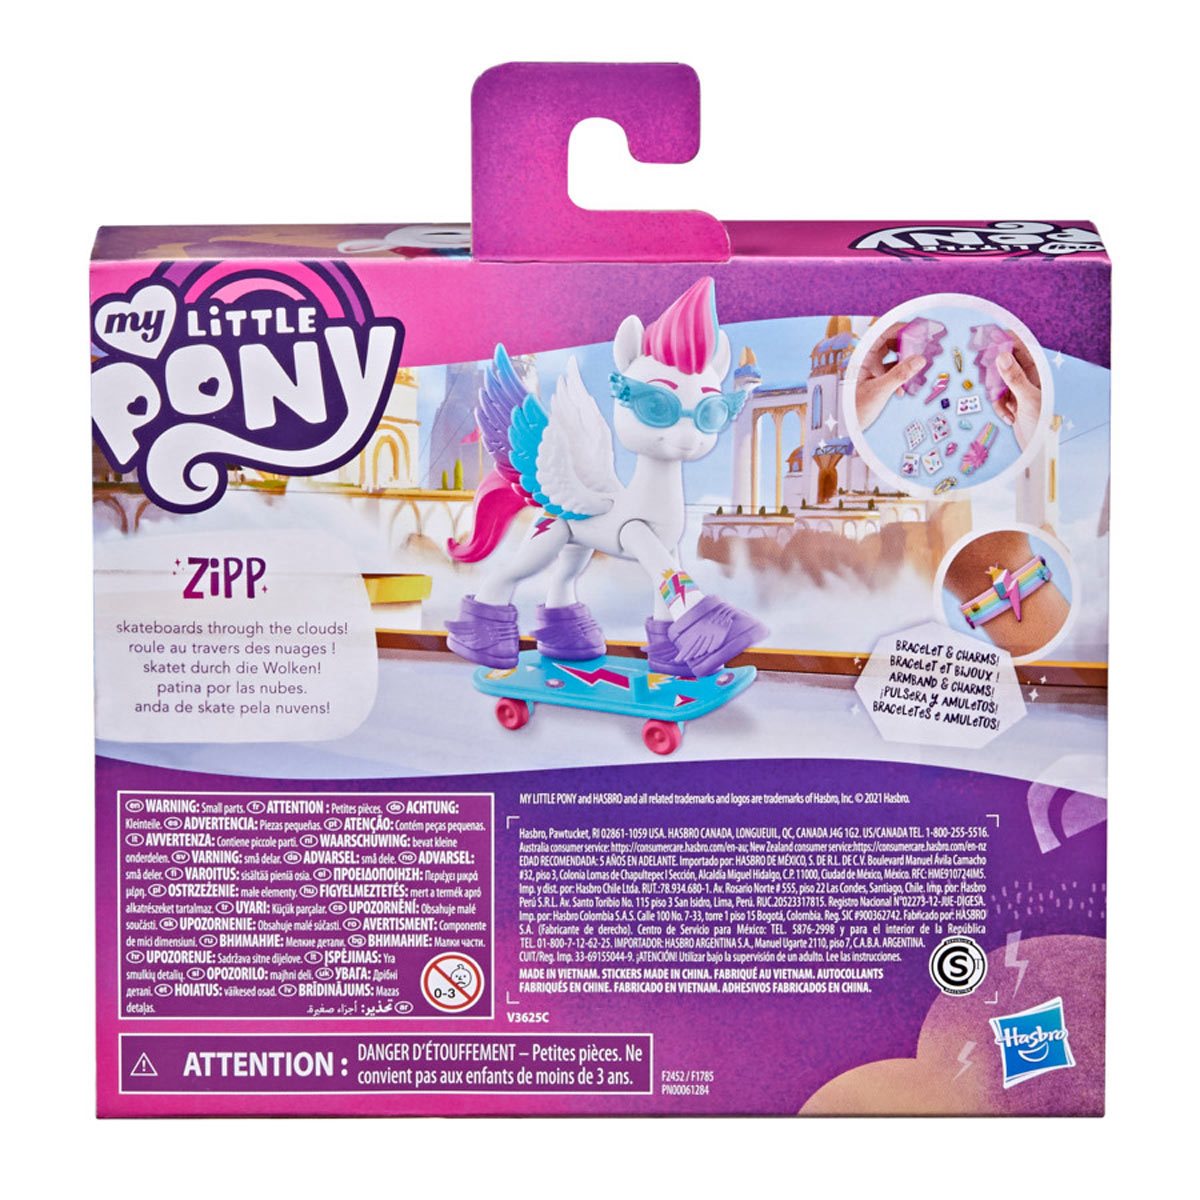 My Little Pony: A New Generation - Zipp Storm Aventura De Cristal